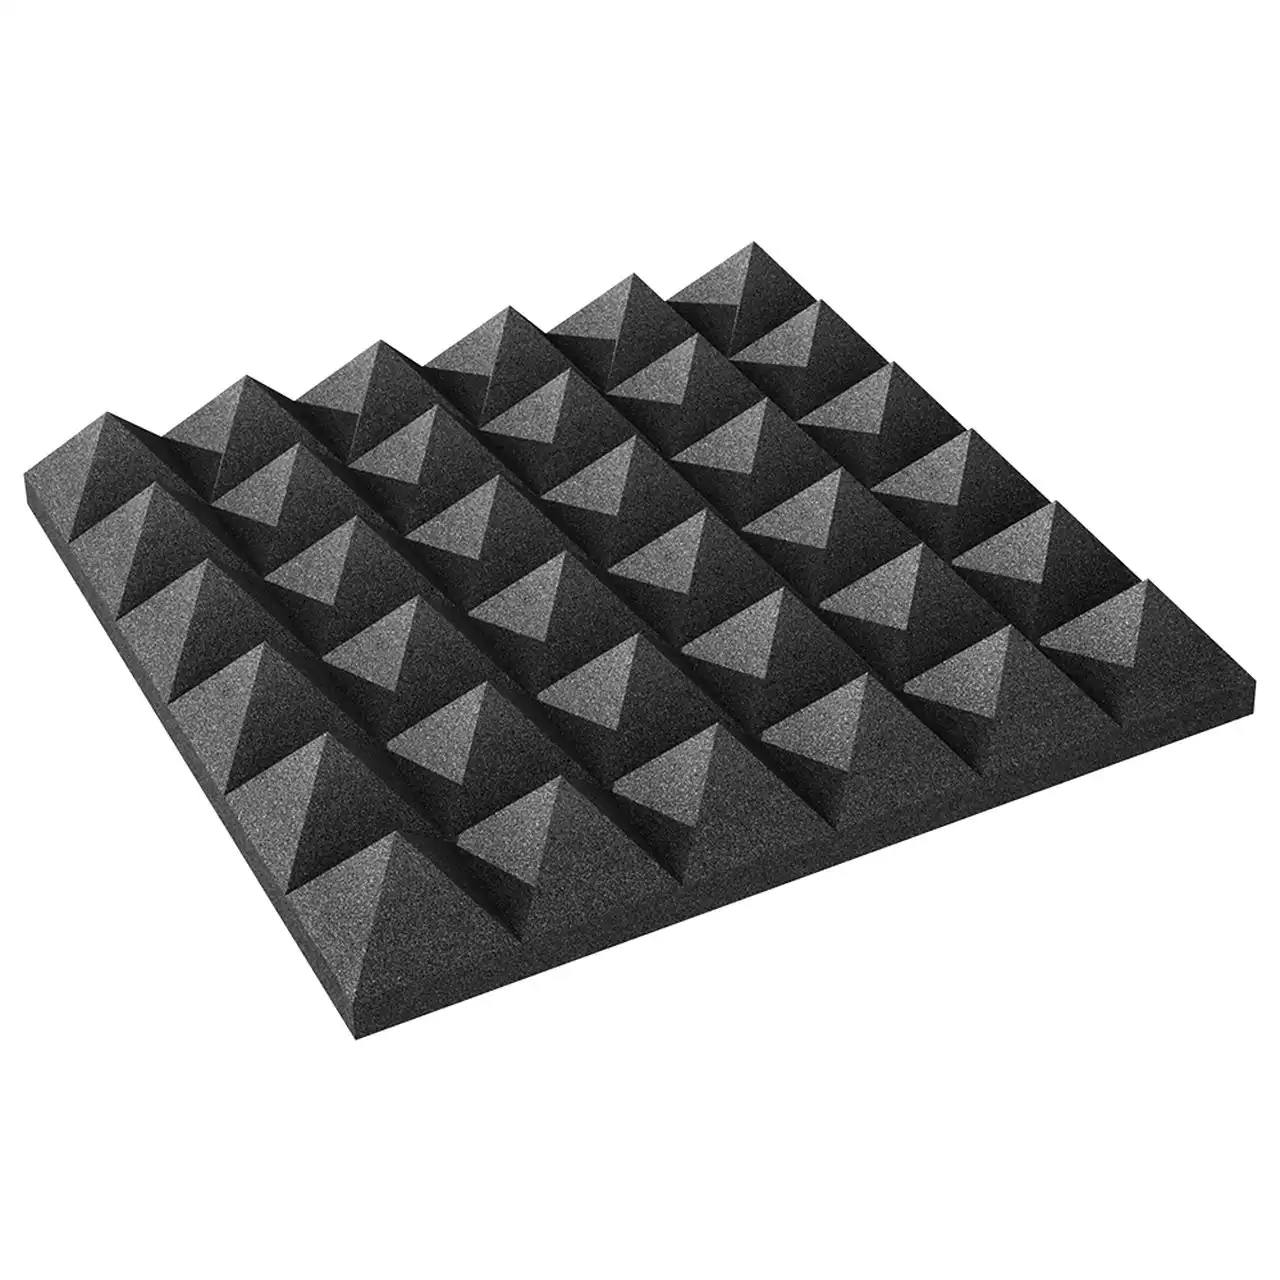 12x Auralex StudioFoam 2ft Pyramid Sound Absorption Panel Room Proofing Charcoal